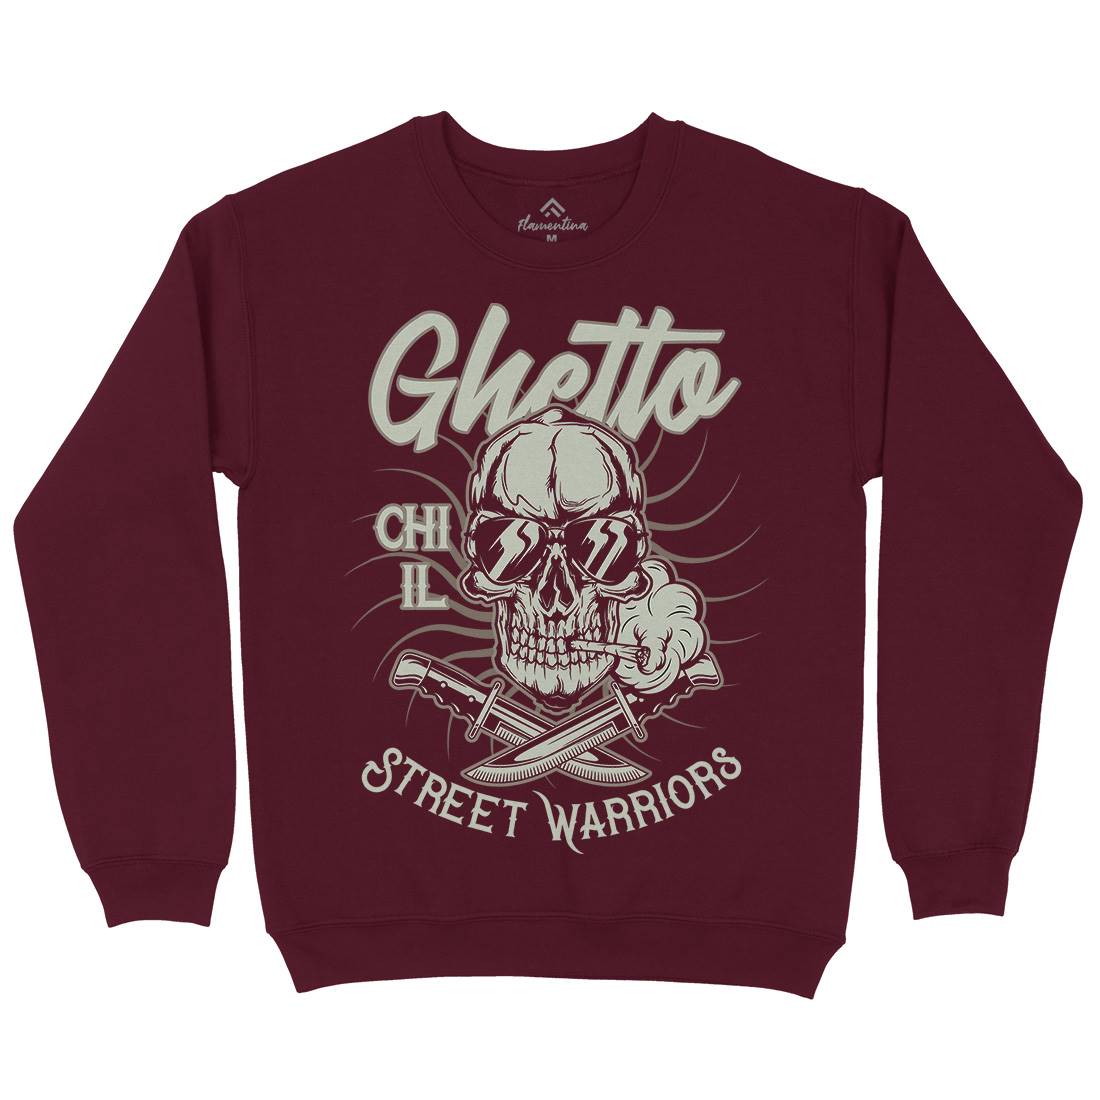 Ghetto Street Warriors Kids Crew Neck Sweatshirt Retro D937